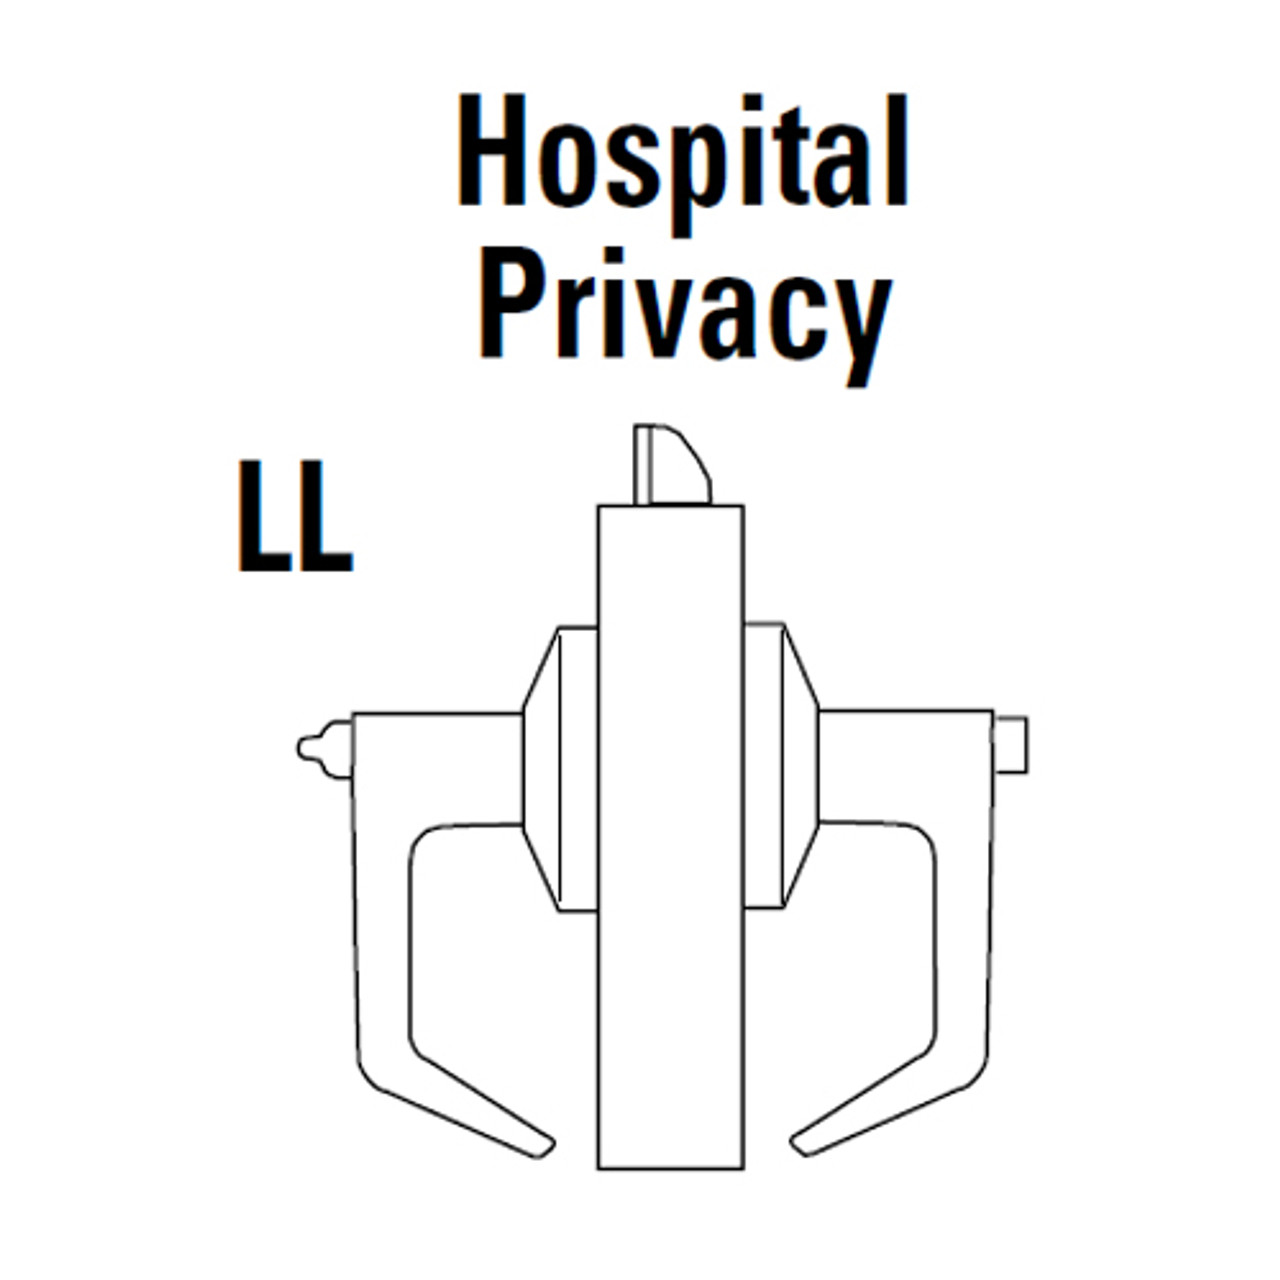 9K50LL14KS3605 Best 9K Series Hospital Privacy Heavy Duty Cylindrical Lever Locks in Bright Brass